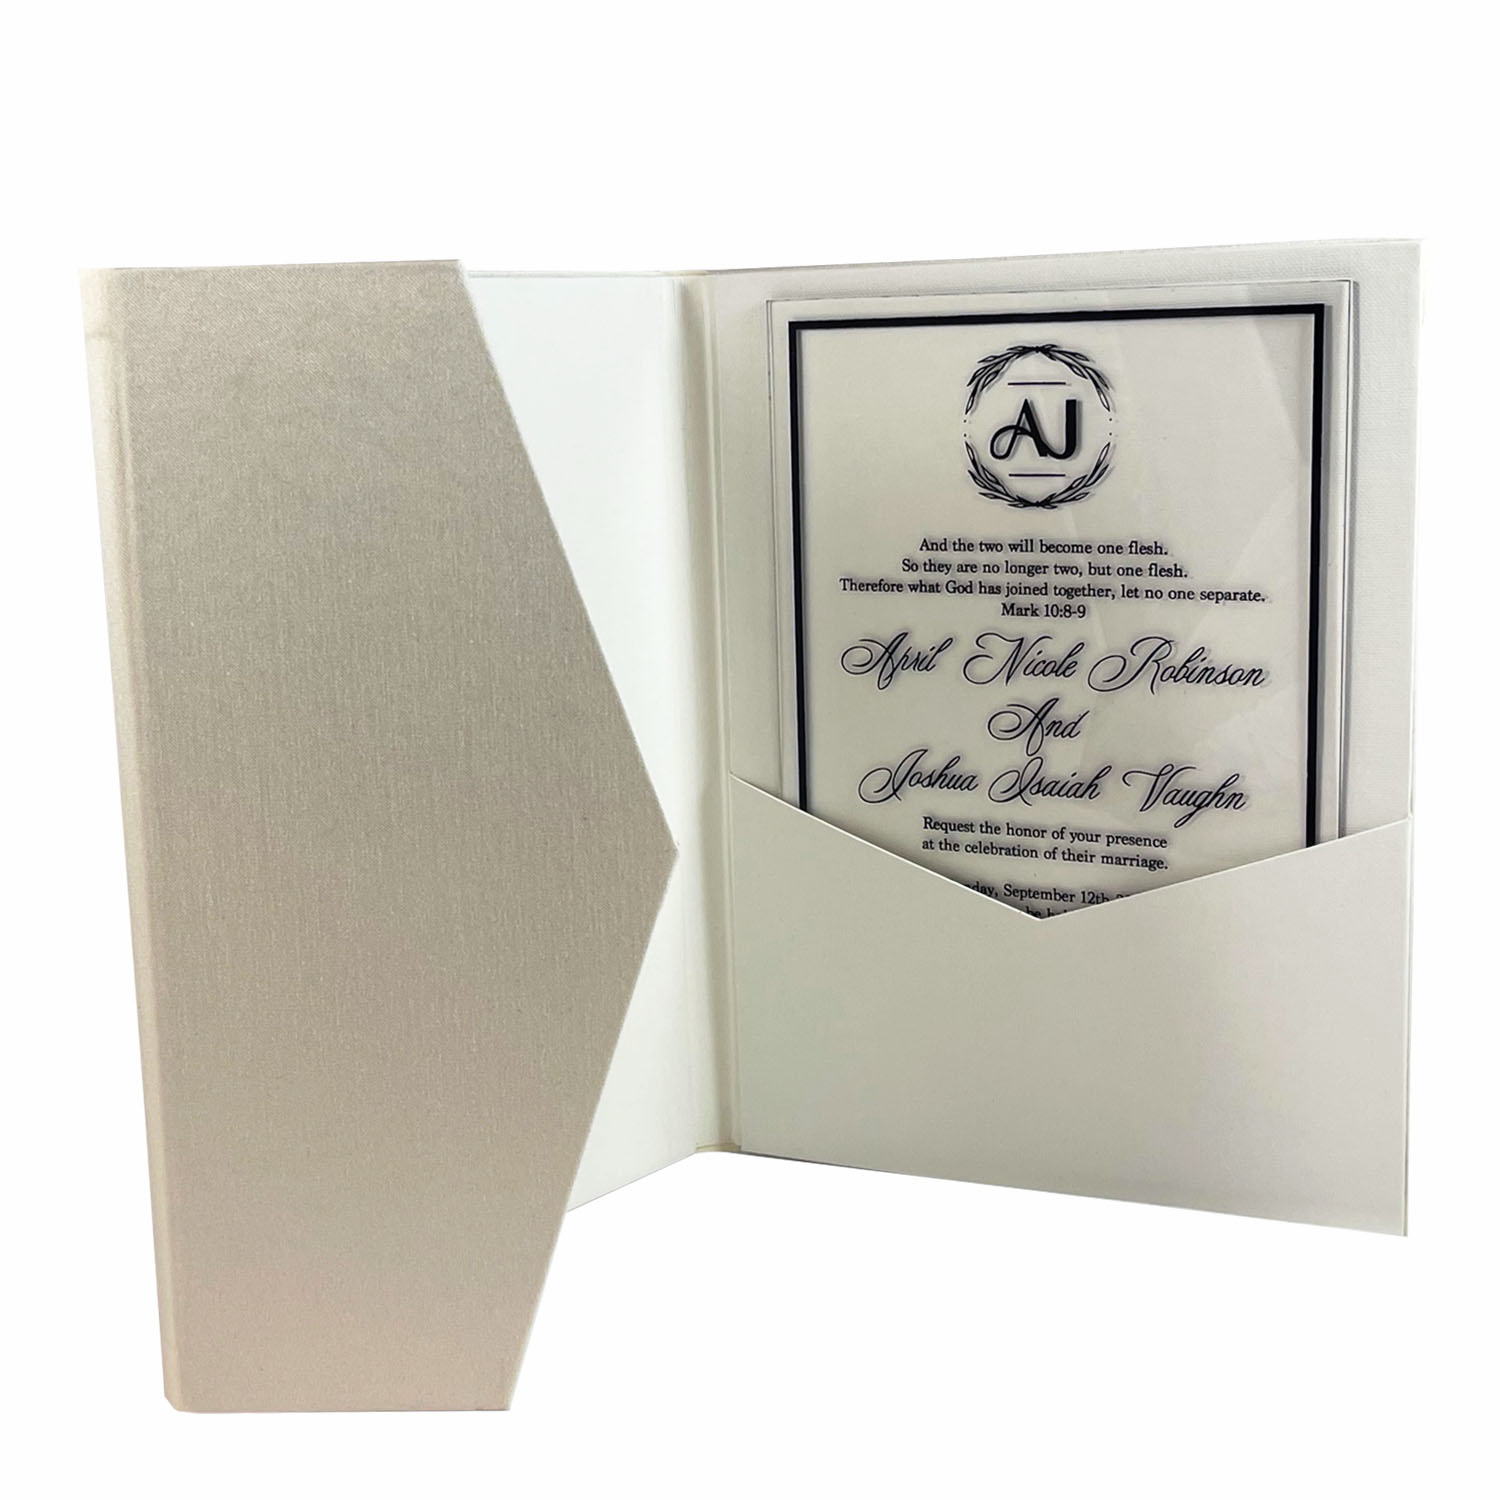 Pocket Invitations - Envelopes, Cards, Supplies